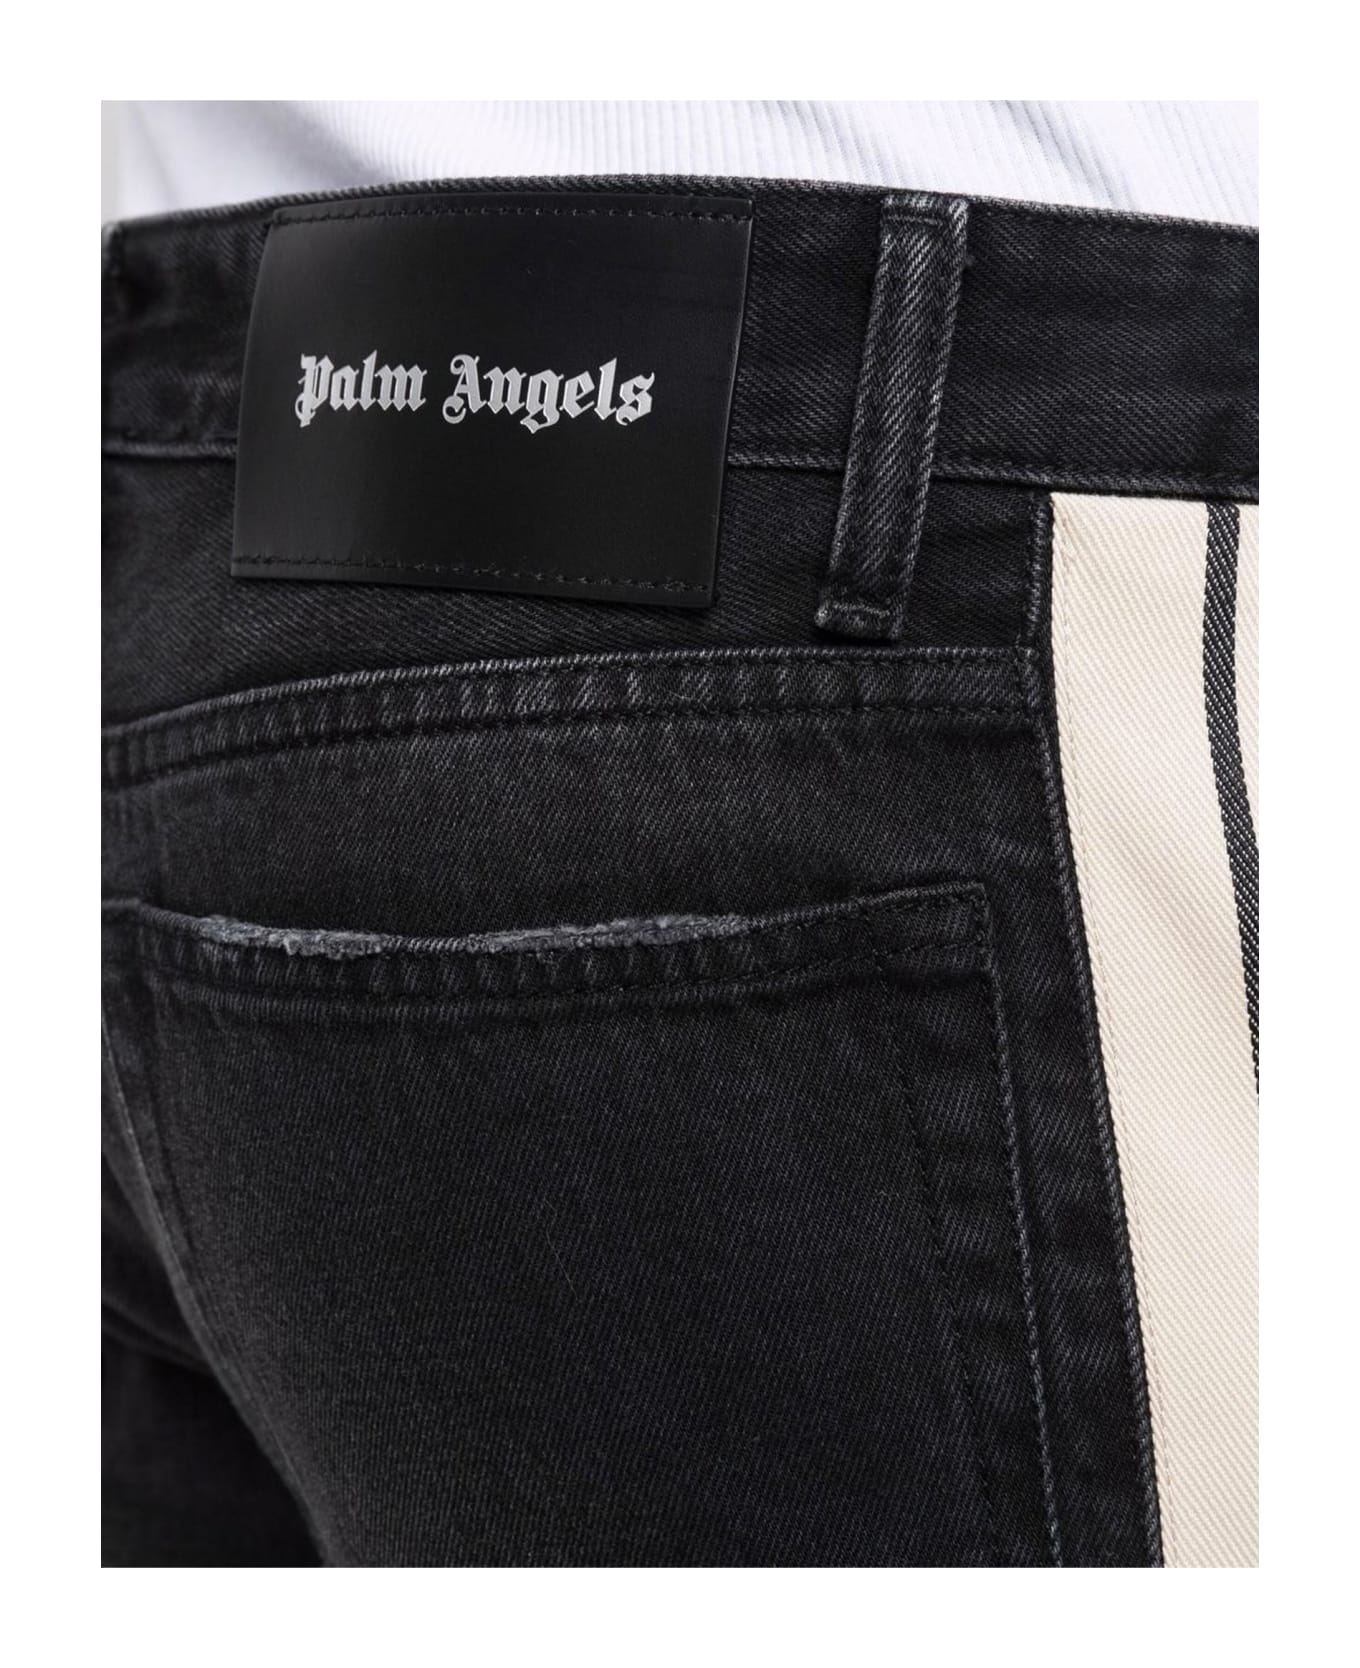 Palm Angels Cotton Denim Jeans - Black デニム